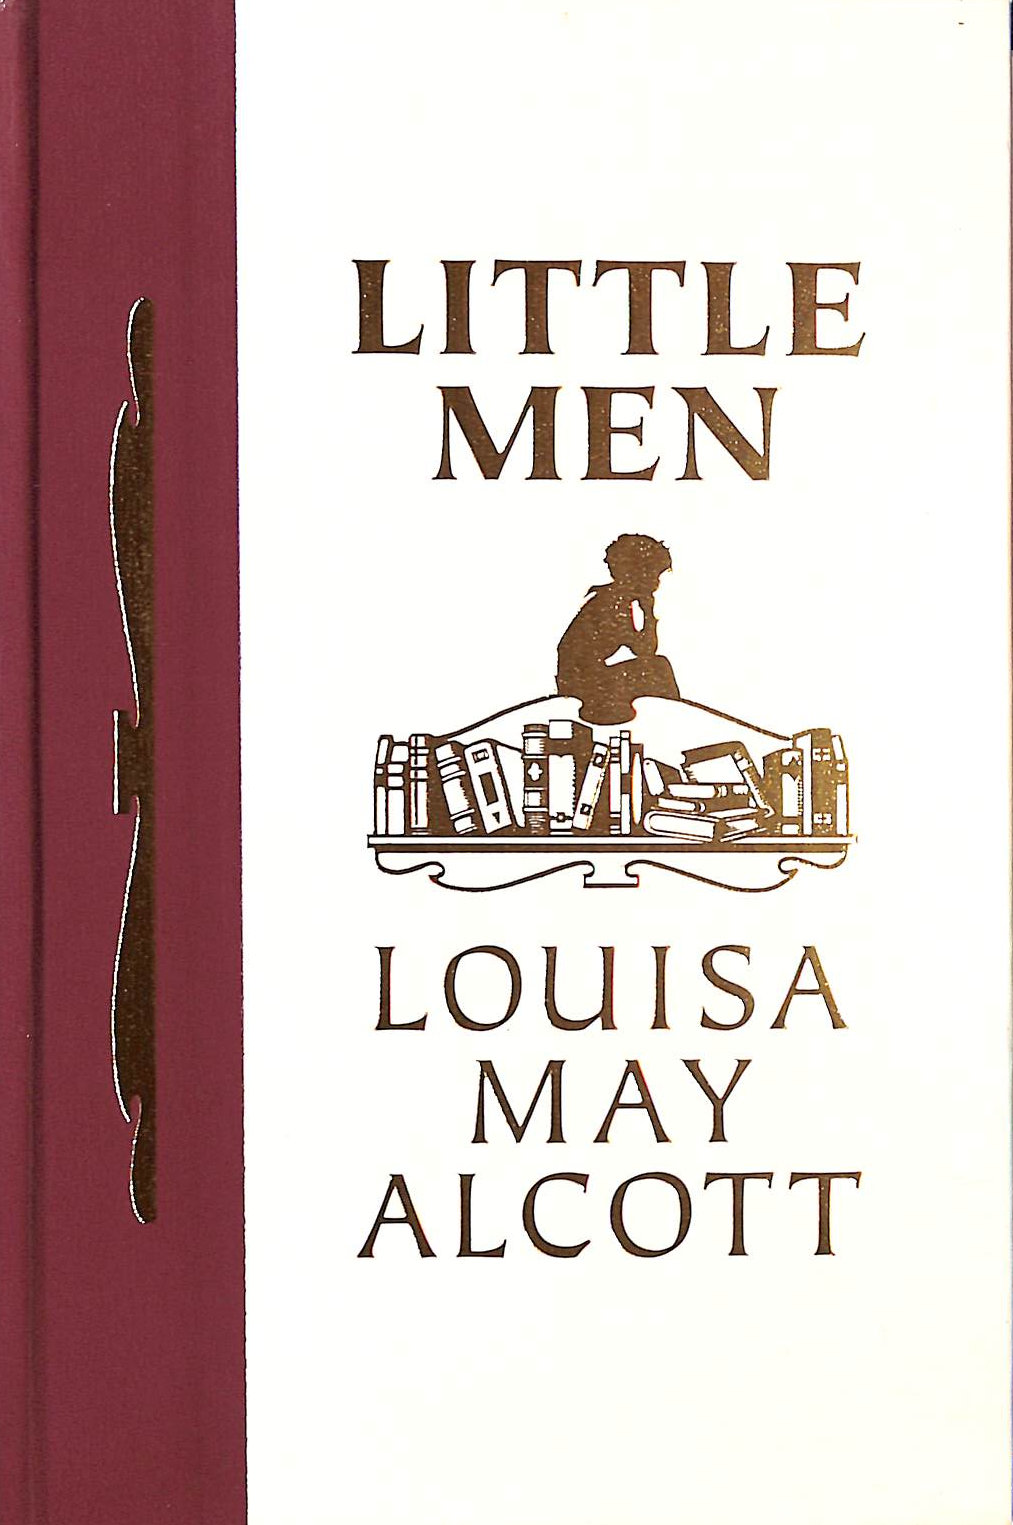 LOUISA MAY ALCOTT - Little Men